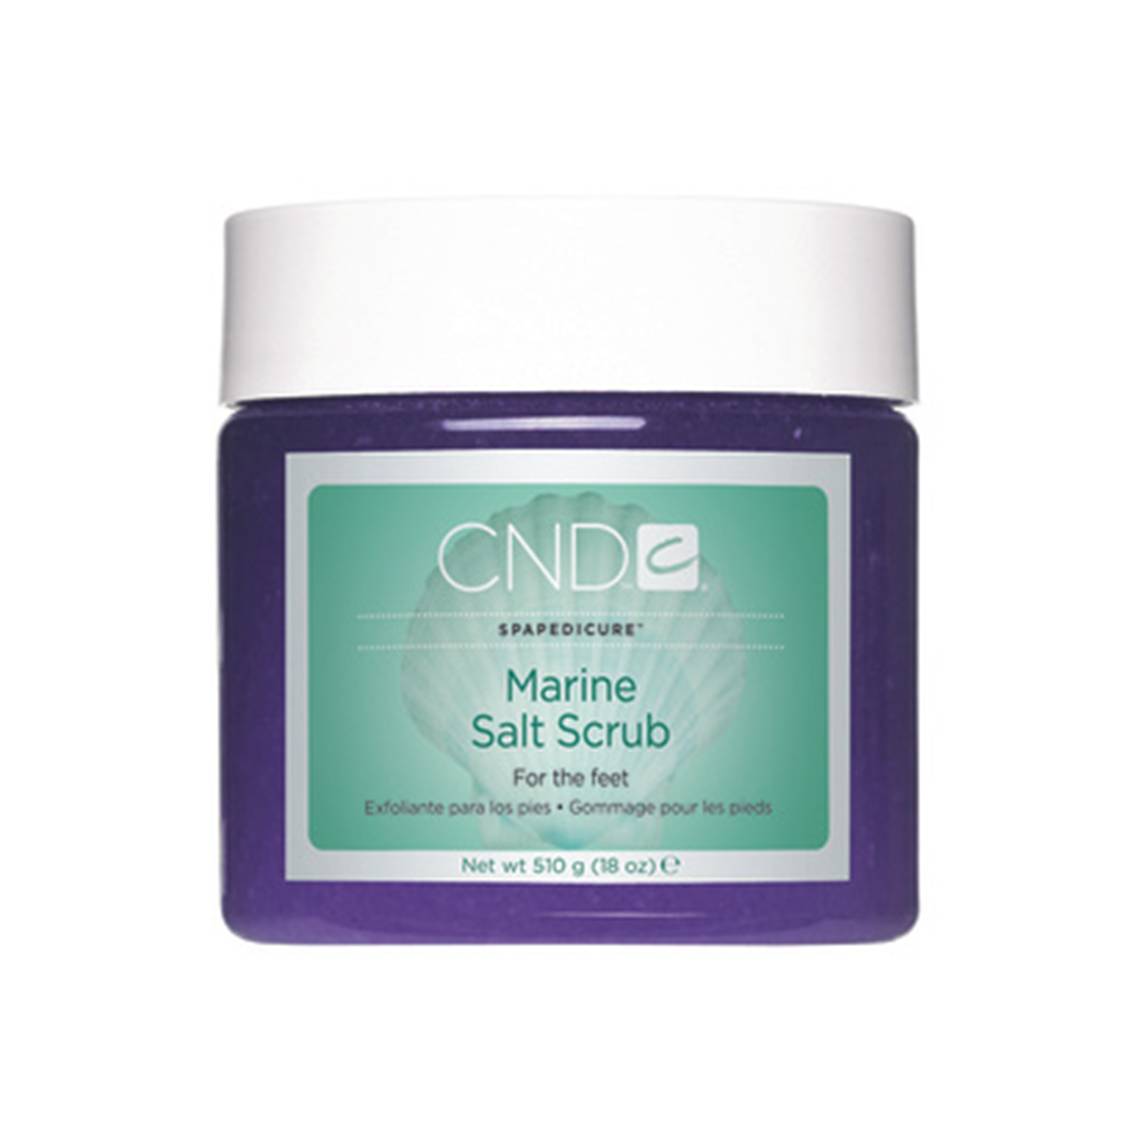 CND™ Marine SpaPedicure Salt Scrub